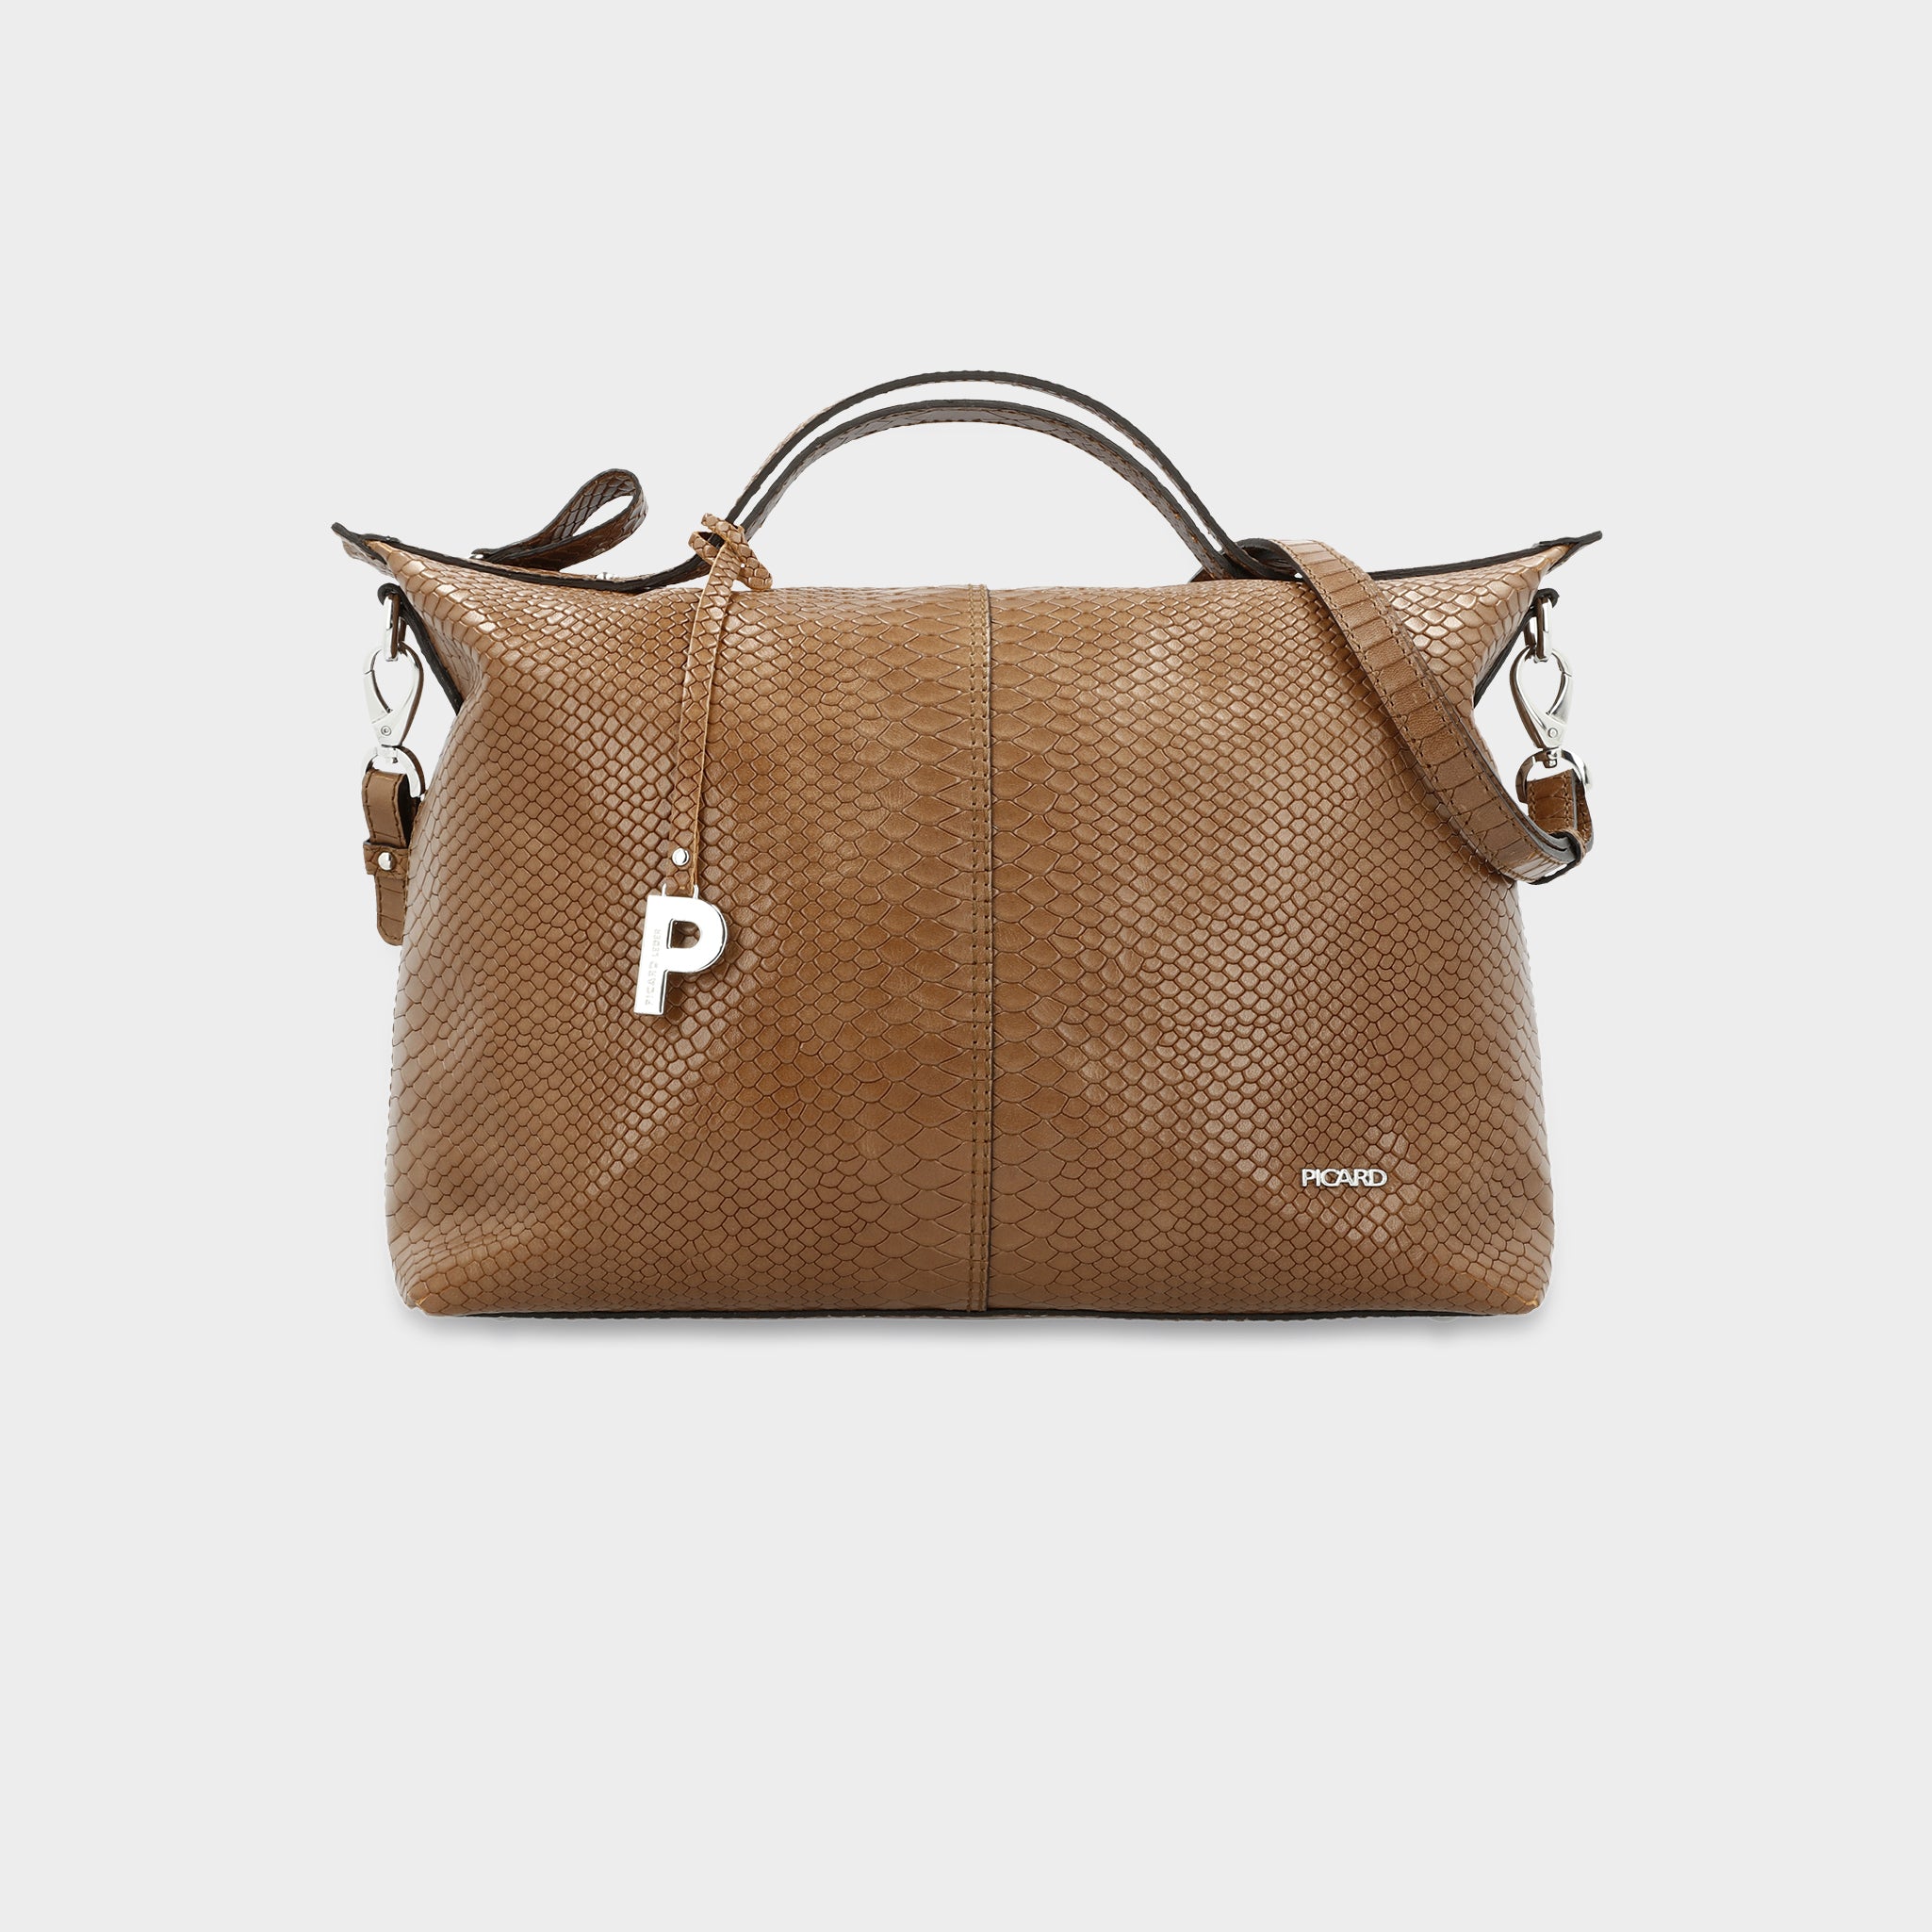 Picard Cowhide Leather Handbag